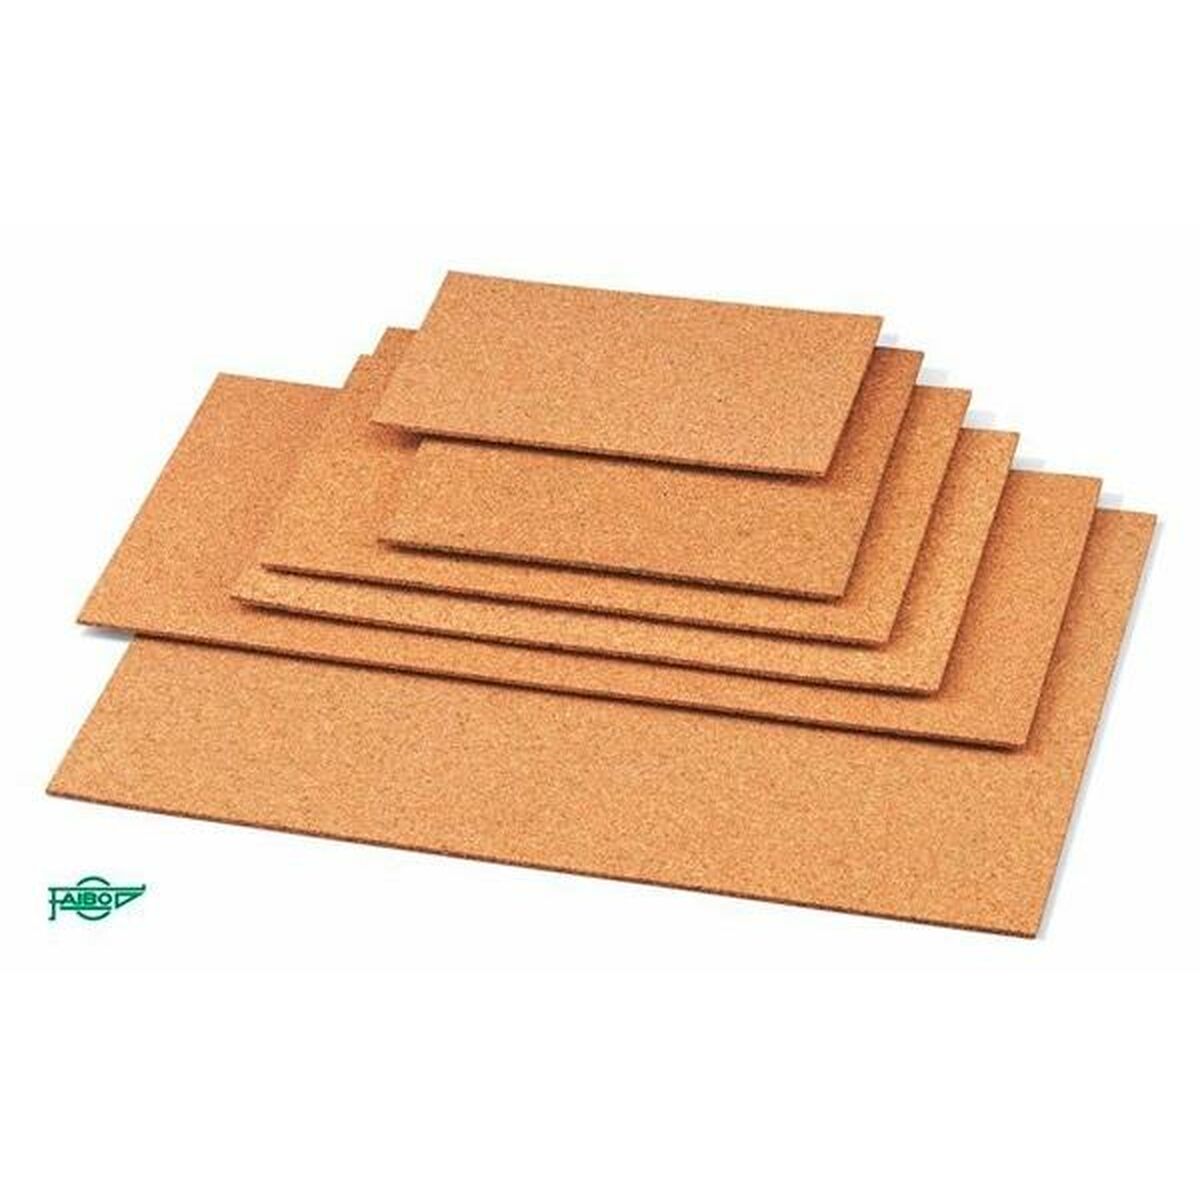 Materials for Handicrafts Faibo Cork 30 x 40 cm (10Units)